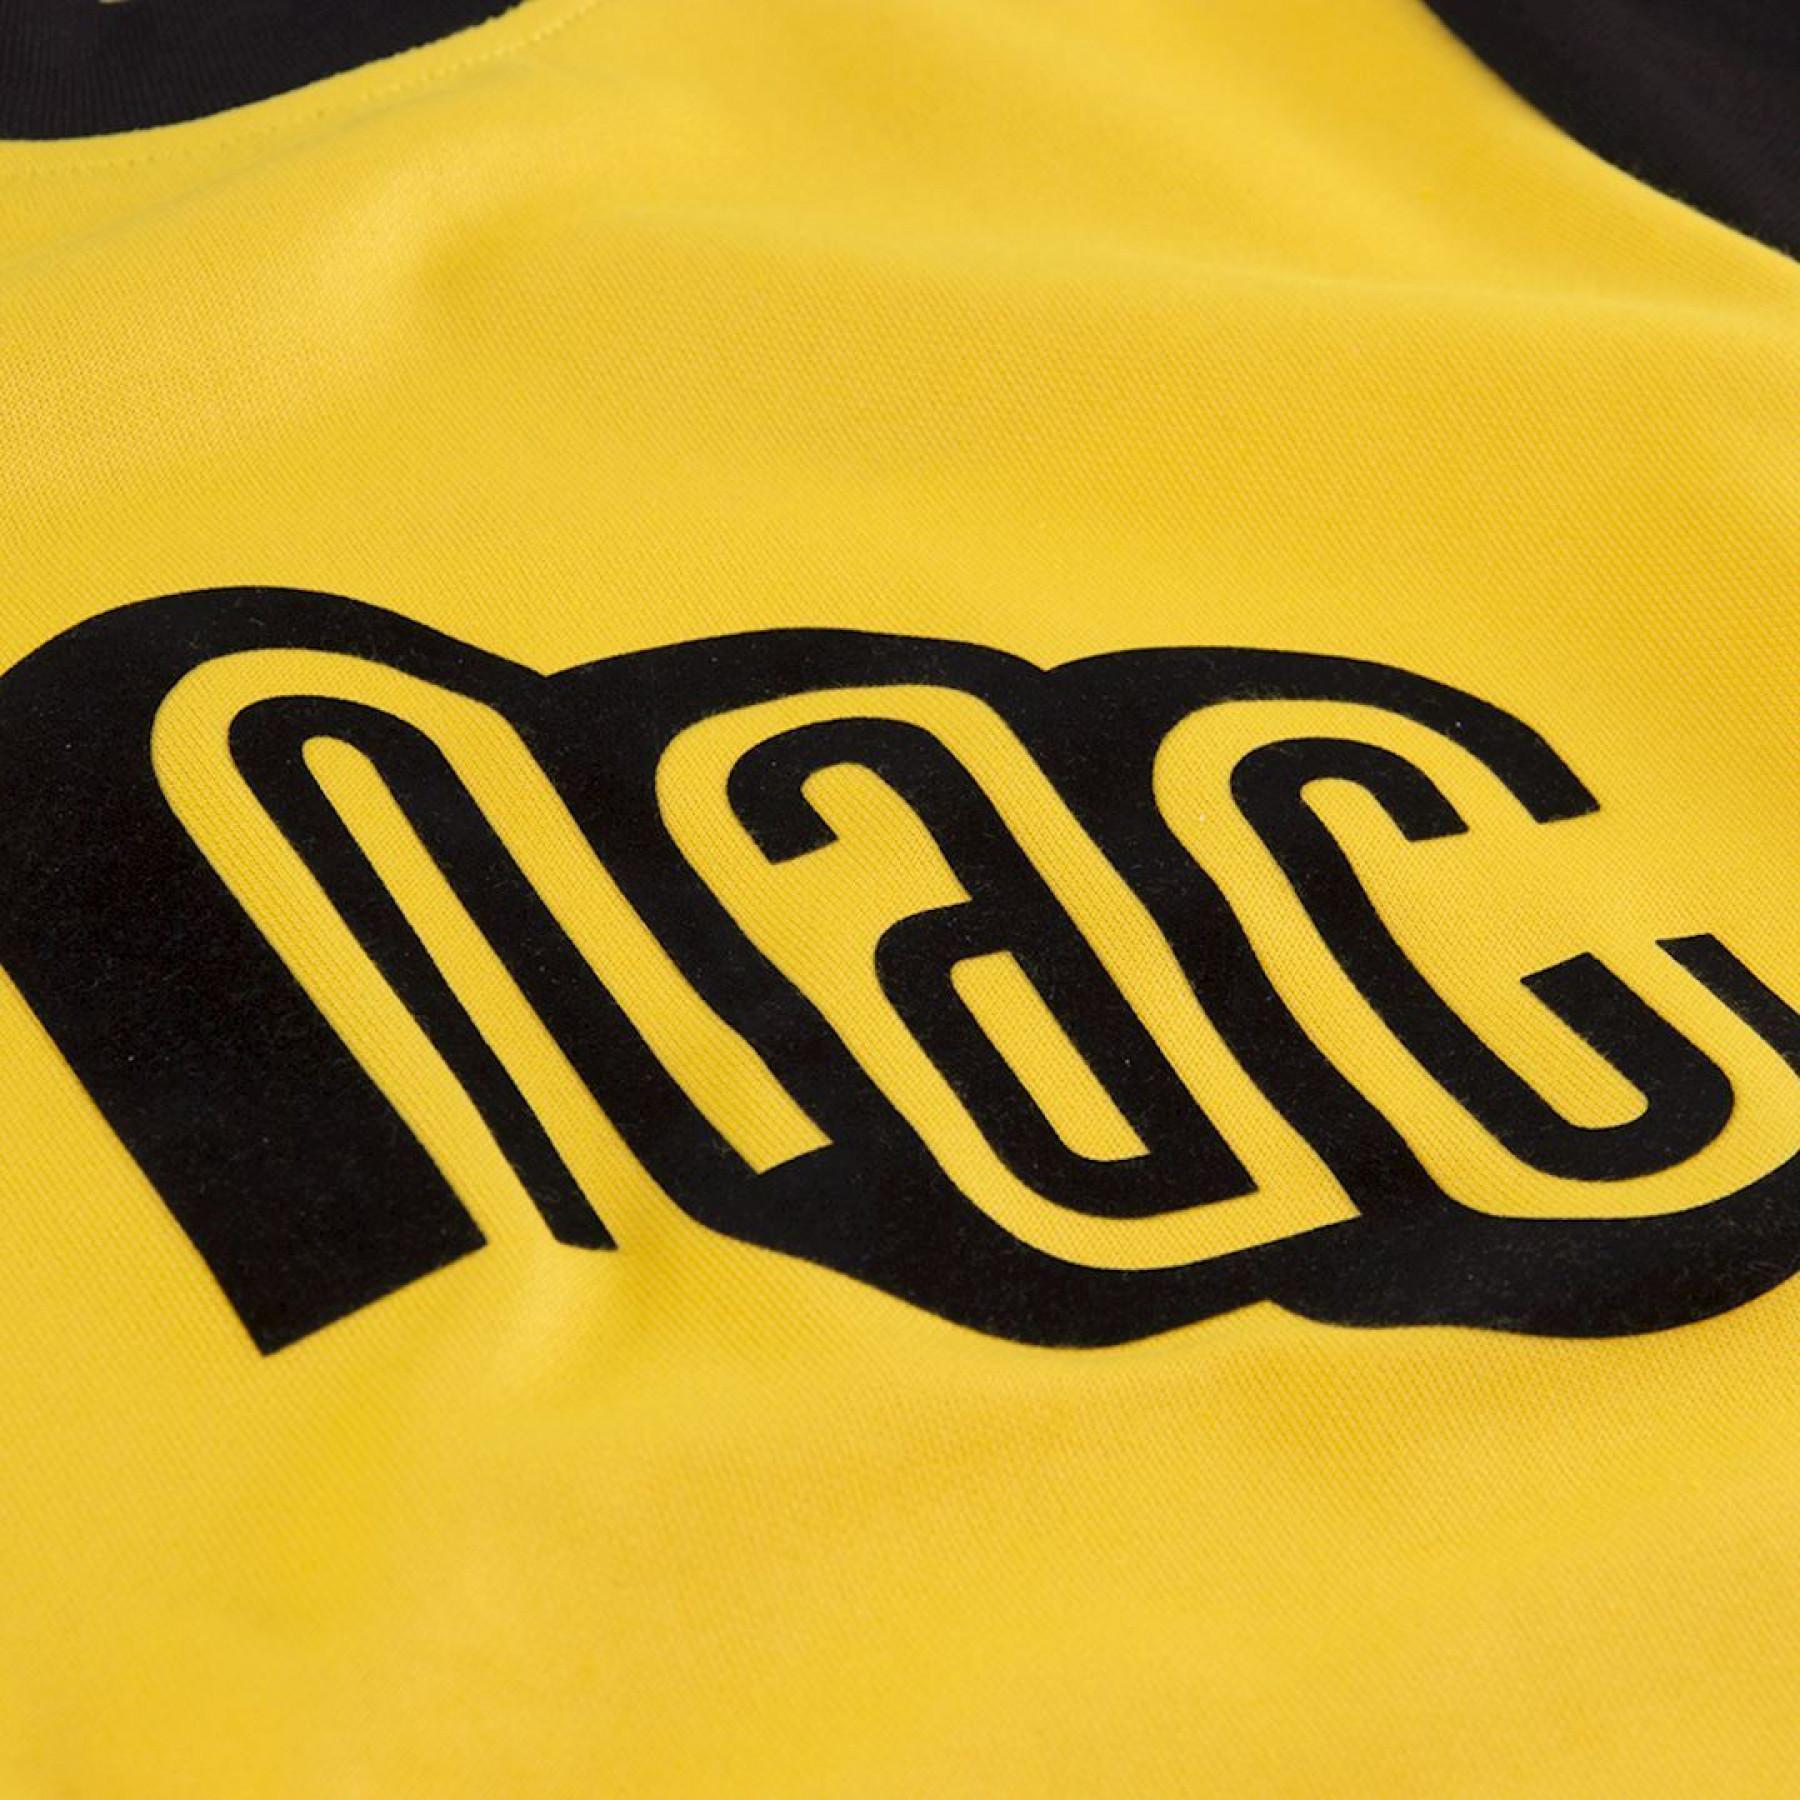 Camiseta Copa NAC Breda 1981/82